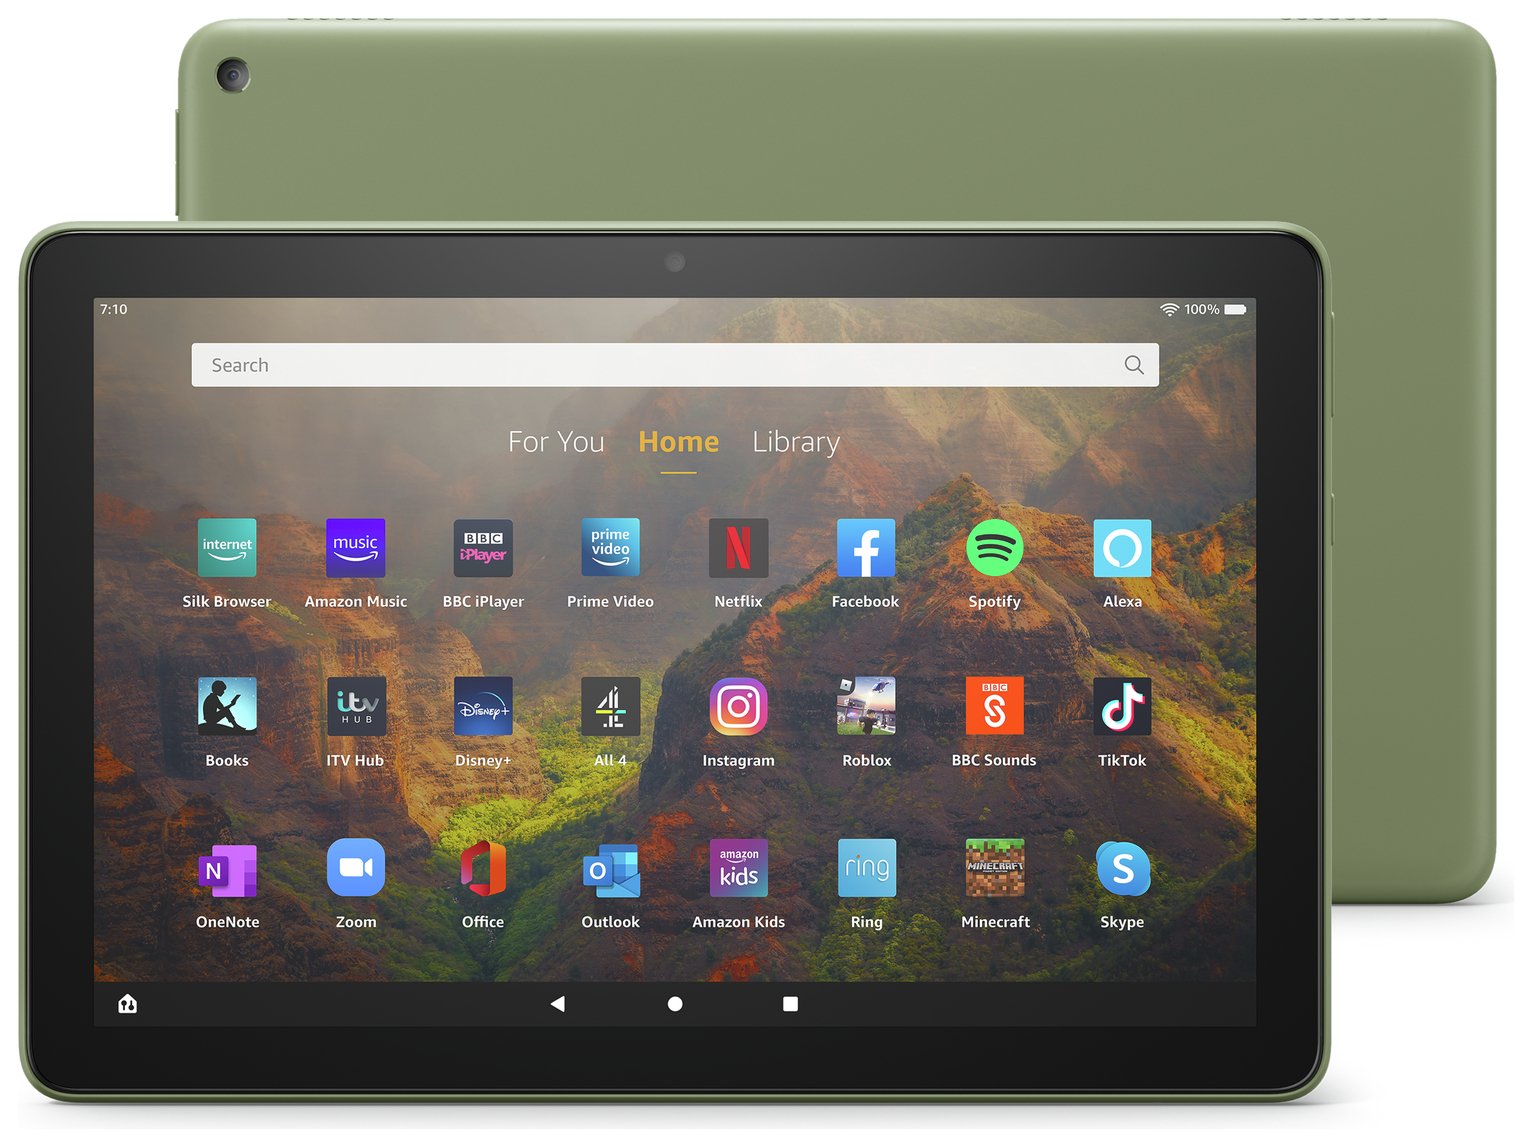 Amazon Fire HD 10.1 Inch 32GB Wi-Fi Tablet - Green